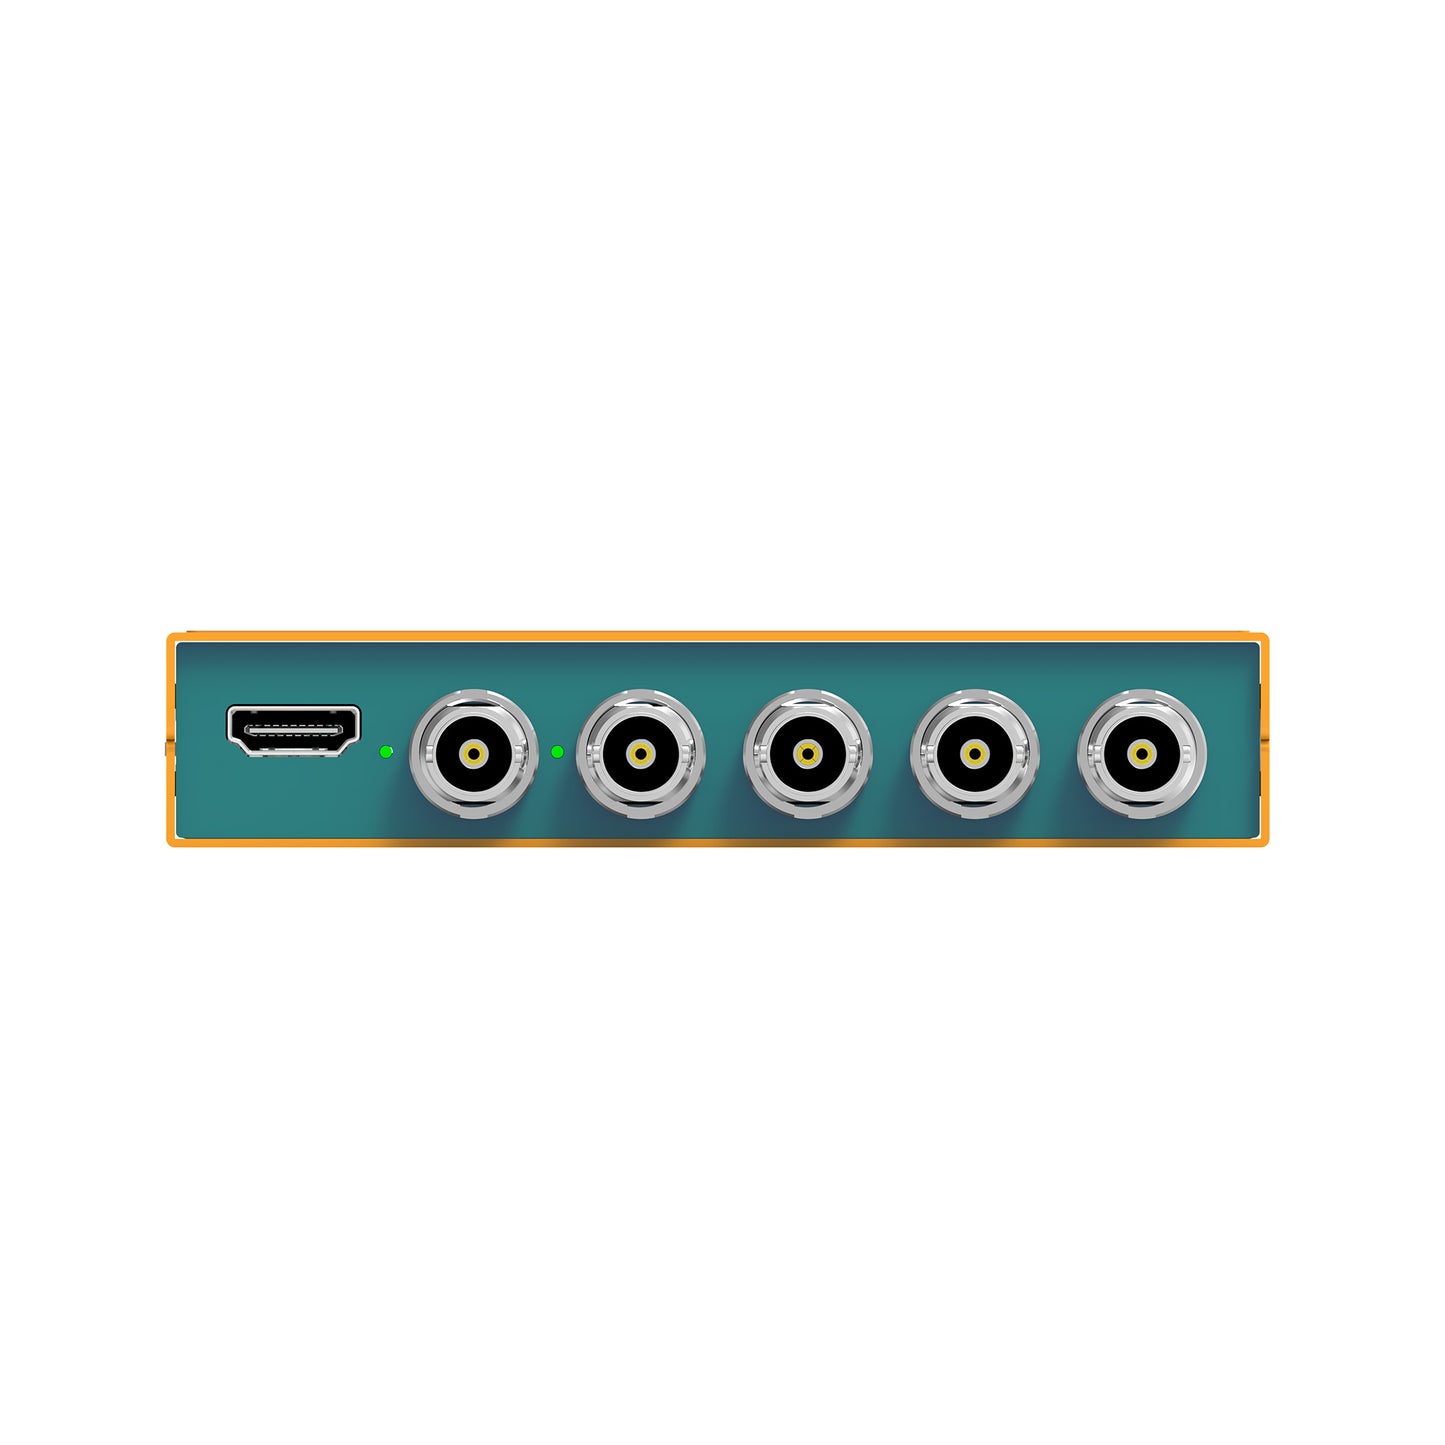 AVMatrix SD2080 2×8 SDI/ HDMI Splitter & Converter with SDI Equalization and Re-Clock, Auto detected 1xHDMI/1x3G-SDI Input, 1080p60 Video I/O, DIP Switches, USB and Threaded Locking DC Power Supply